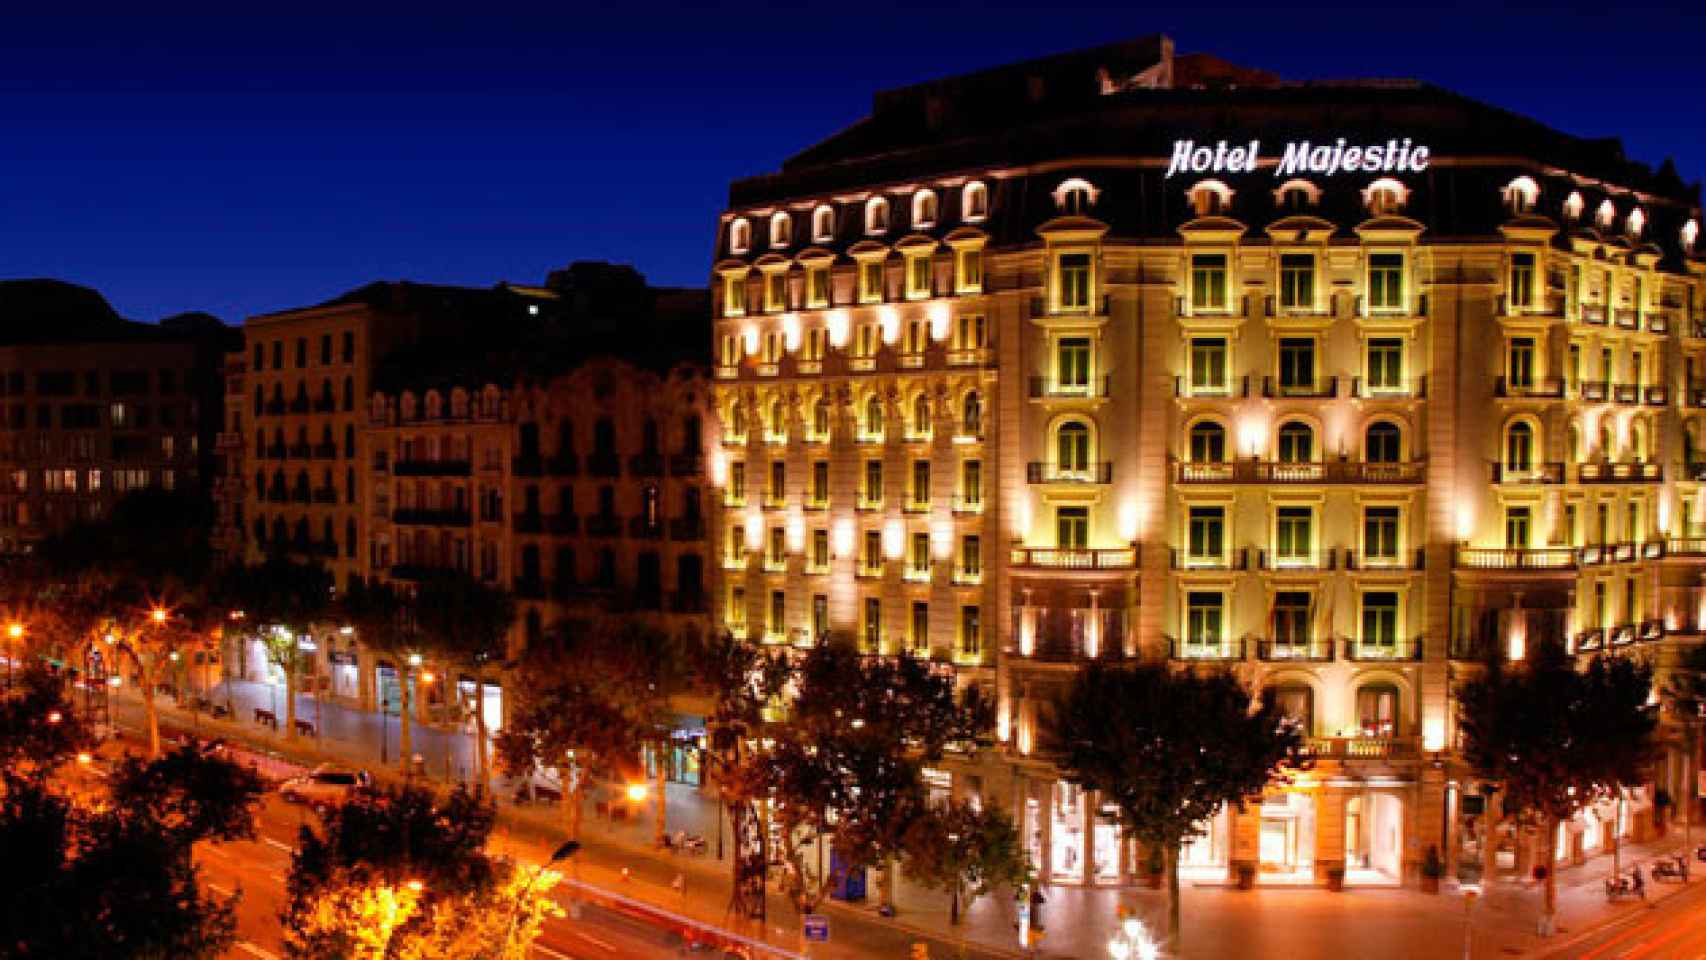 Hotel Majestic de Barcelona / CG